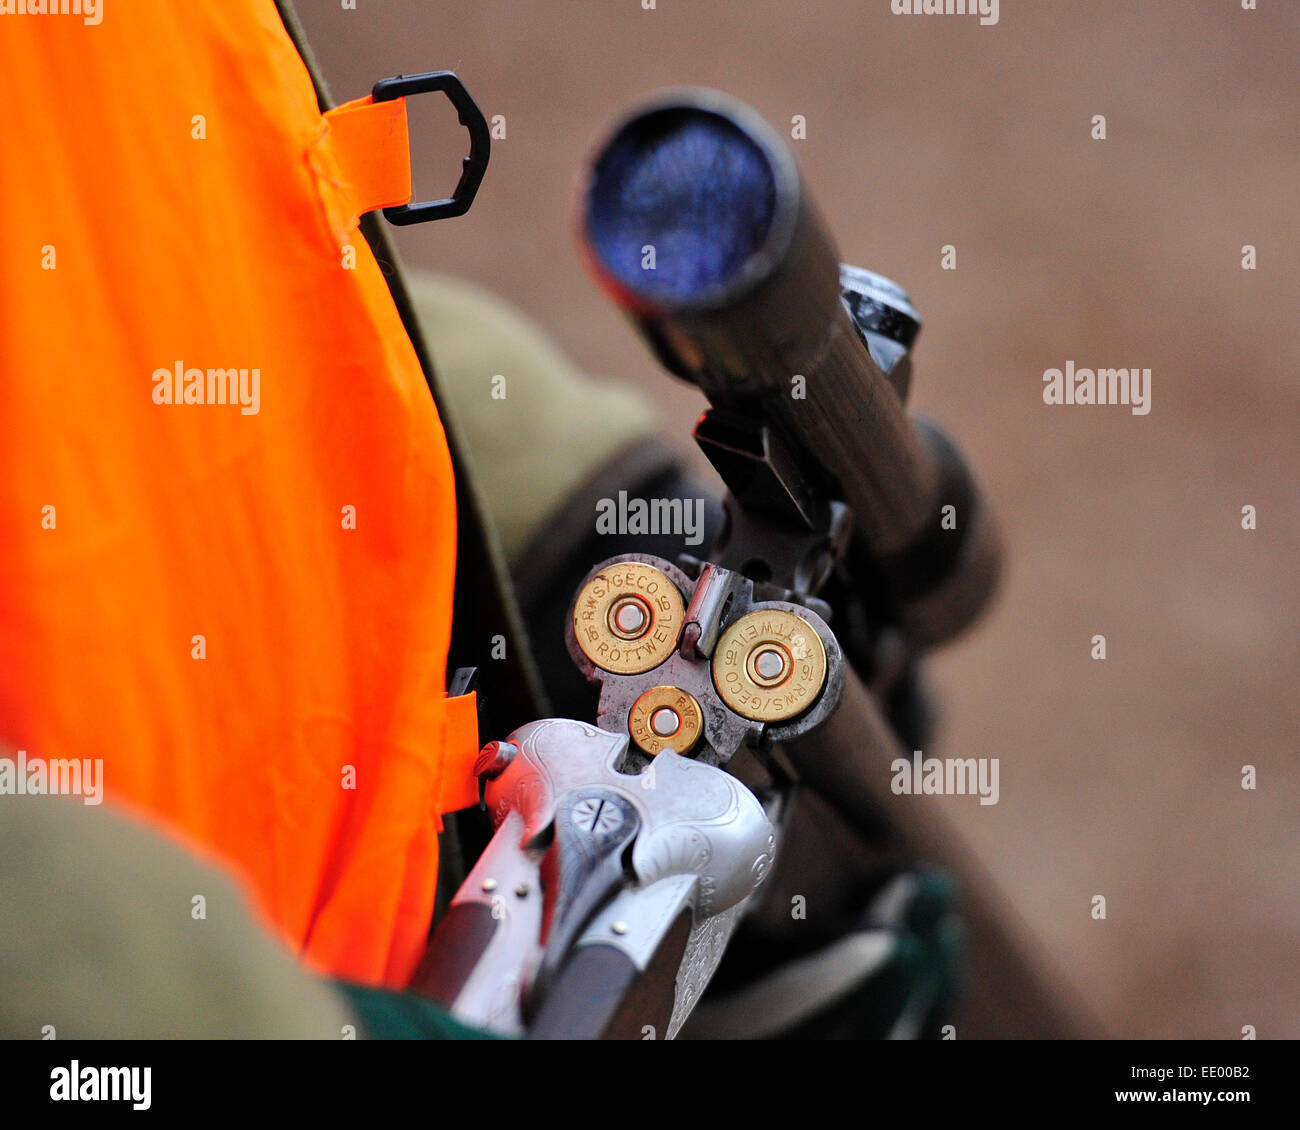 drilling gun Stock Photo